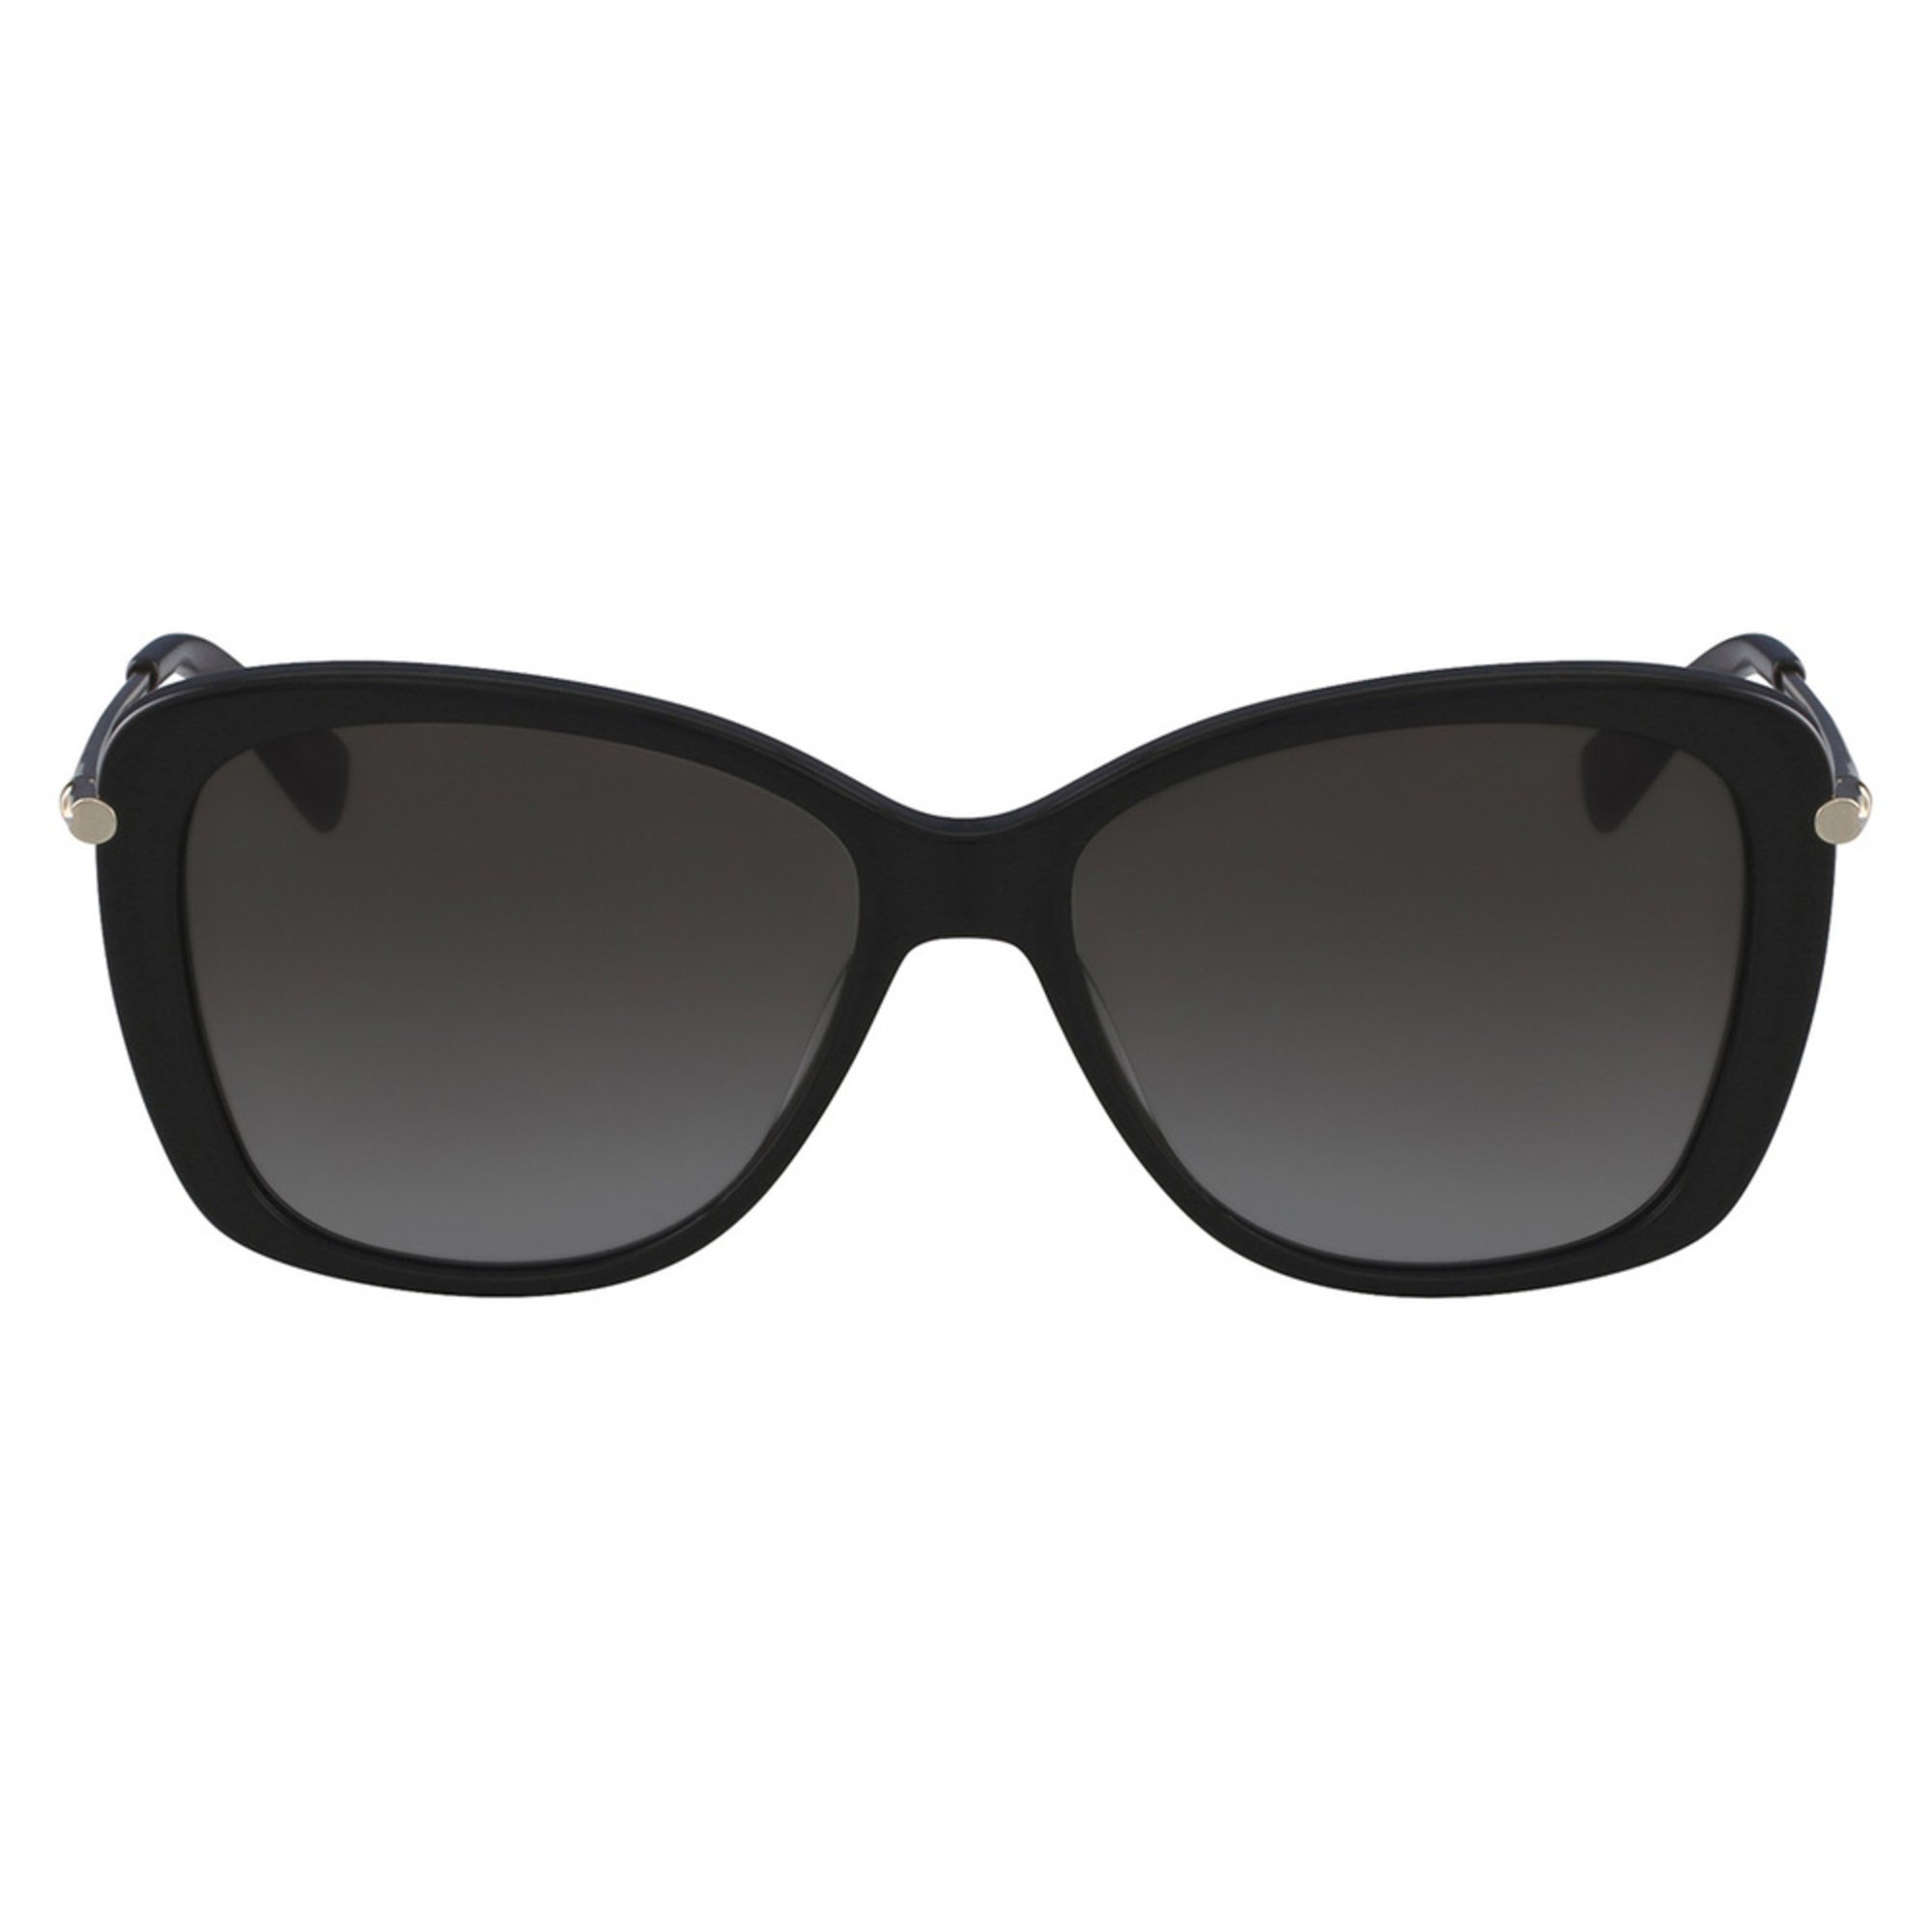 Longchamp Women's Butterfly Sunglasses | Women's Sunglasses ...